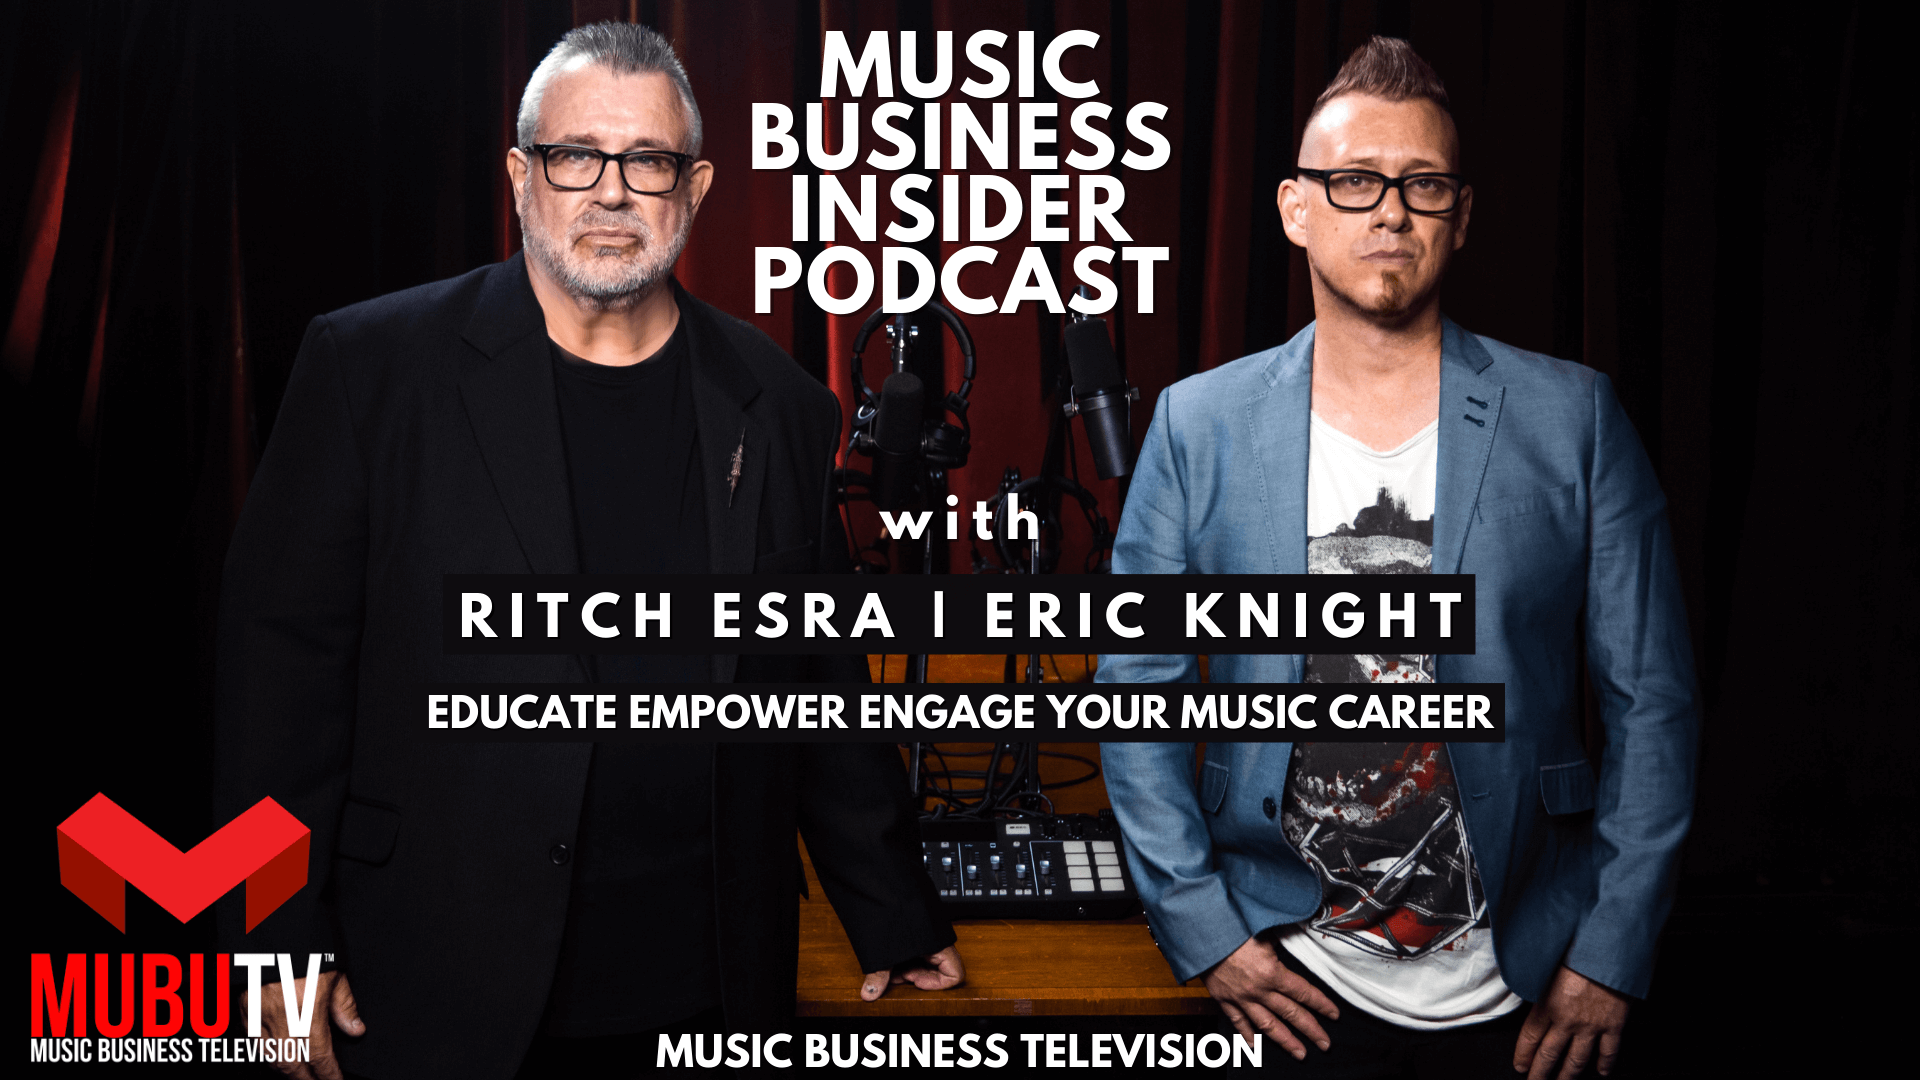 Music Business Insider Podcast [MUBUTV] 